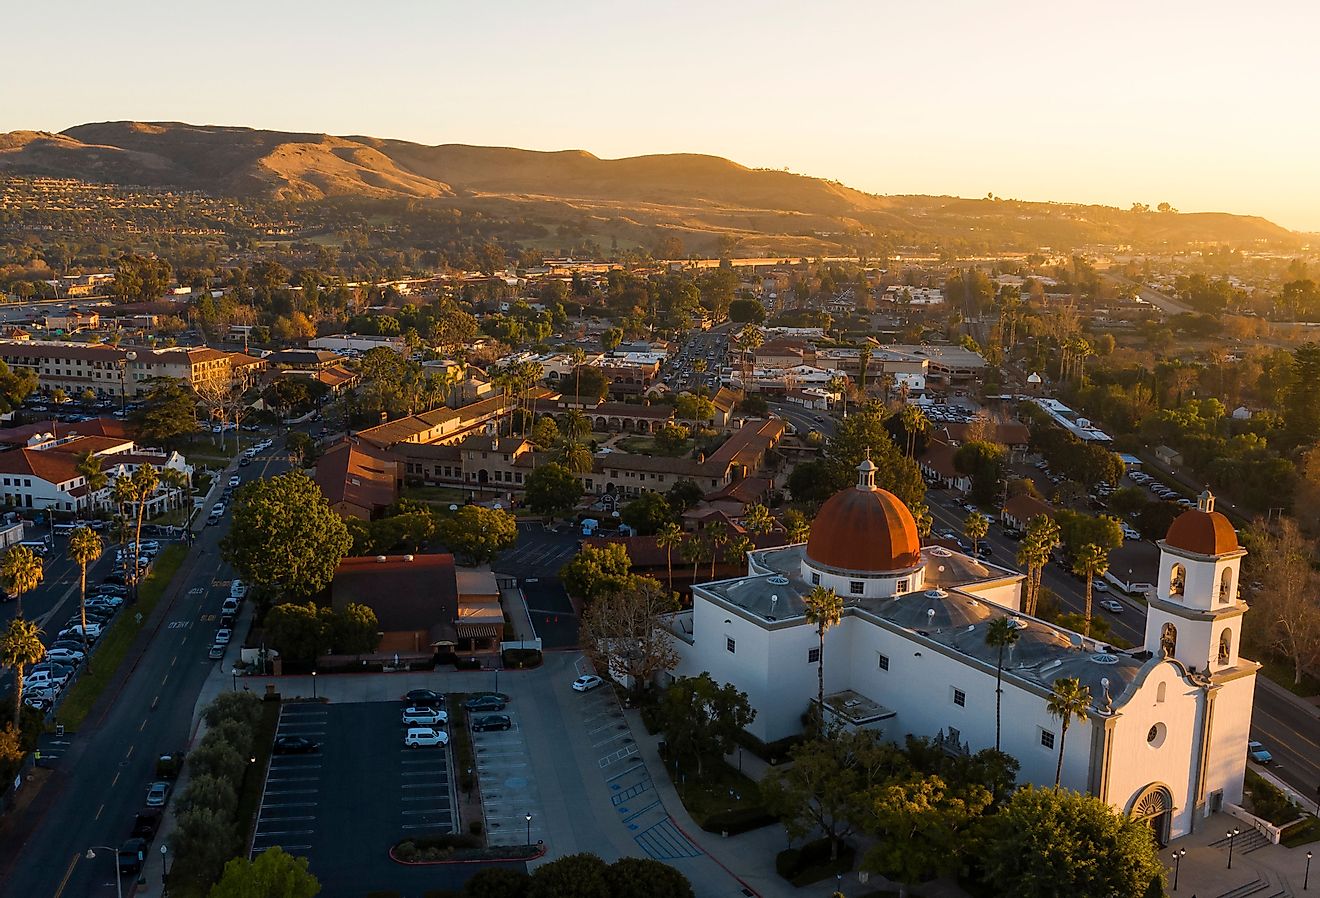 Sunset aerial view of the Spanish Colonial era mission and downtown San Juan Capistrano, California. Image credit Matt Gush via Shutterstock